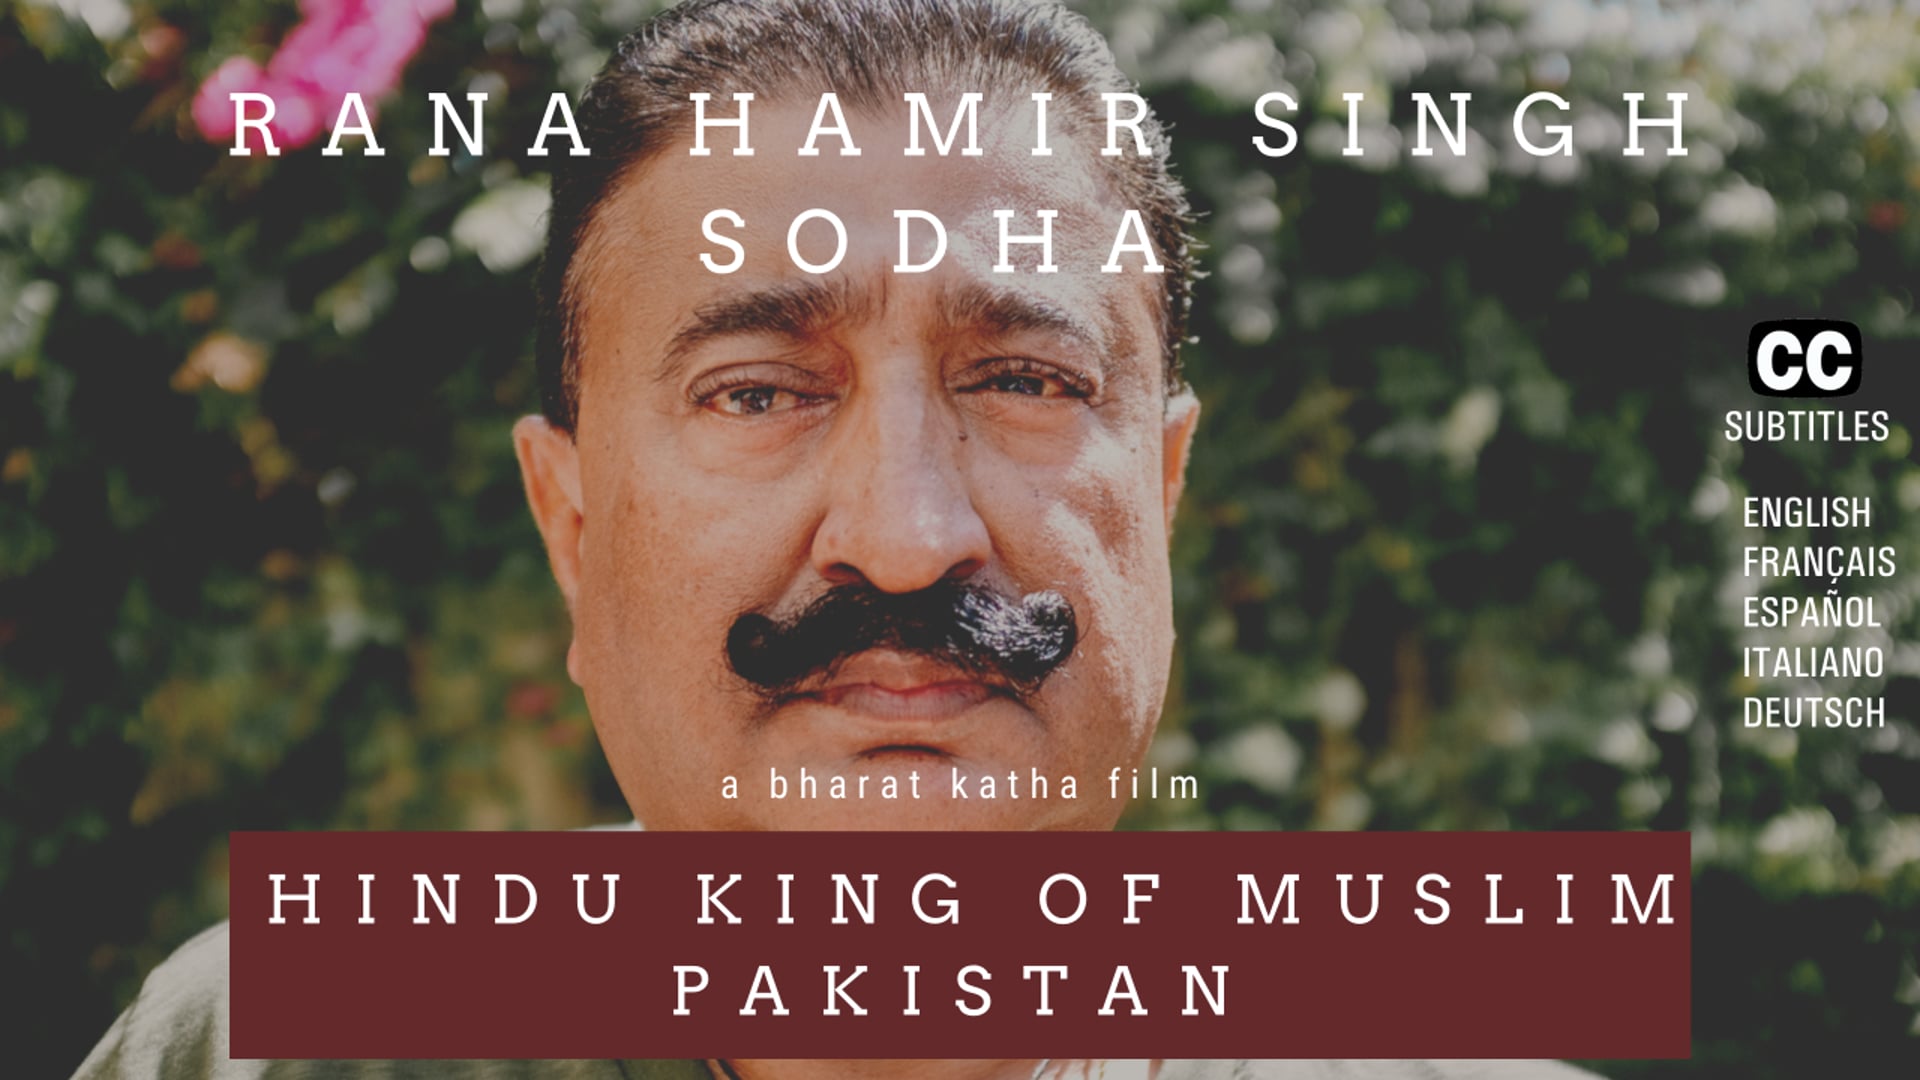 The story of a Hindu king of Muslim Pakistan, Rana Hamir Singh of Amarkot Sindh.